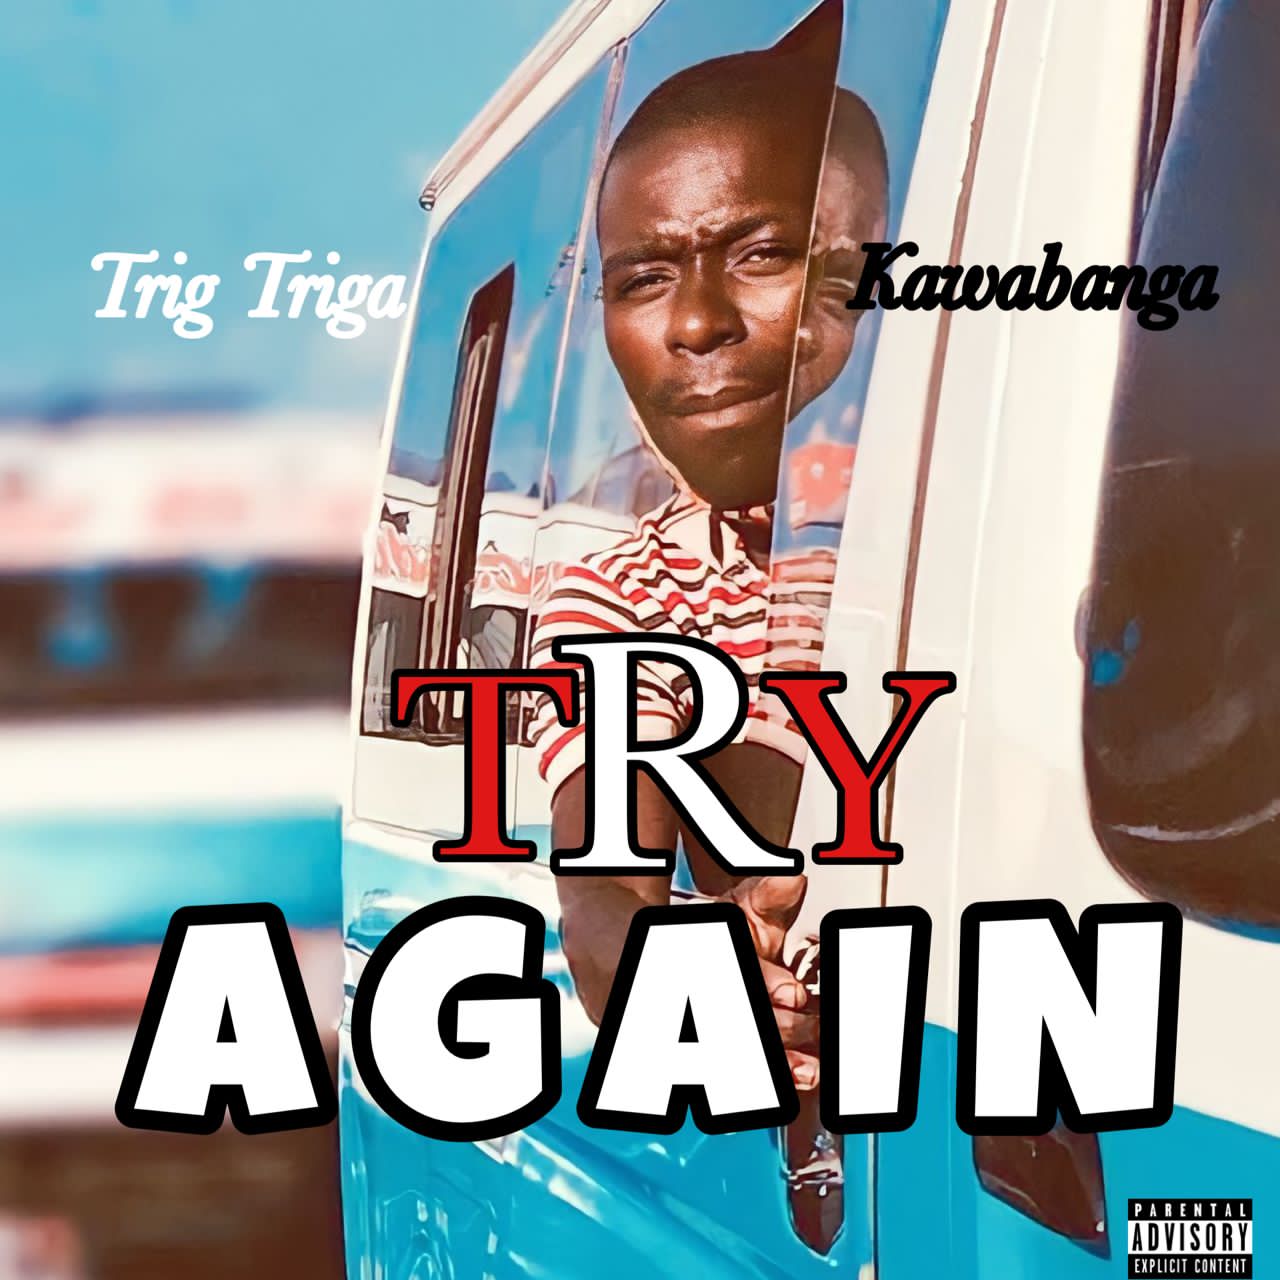 Trig Triga teams up with Kawabanga on ‘Try Again’